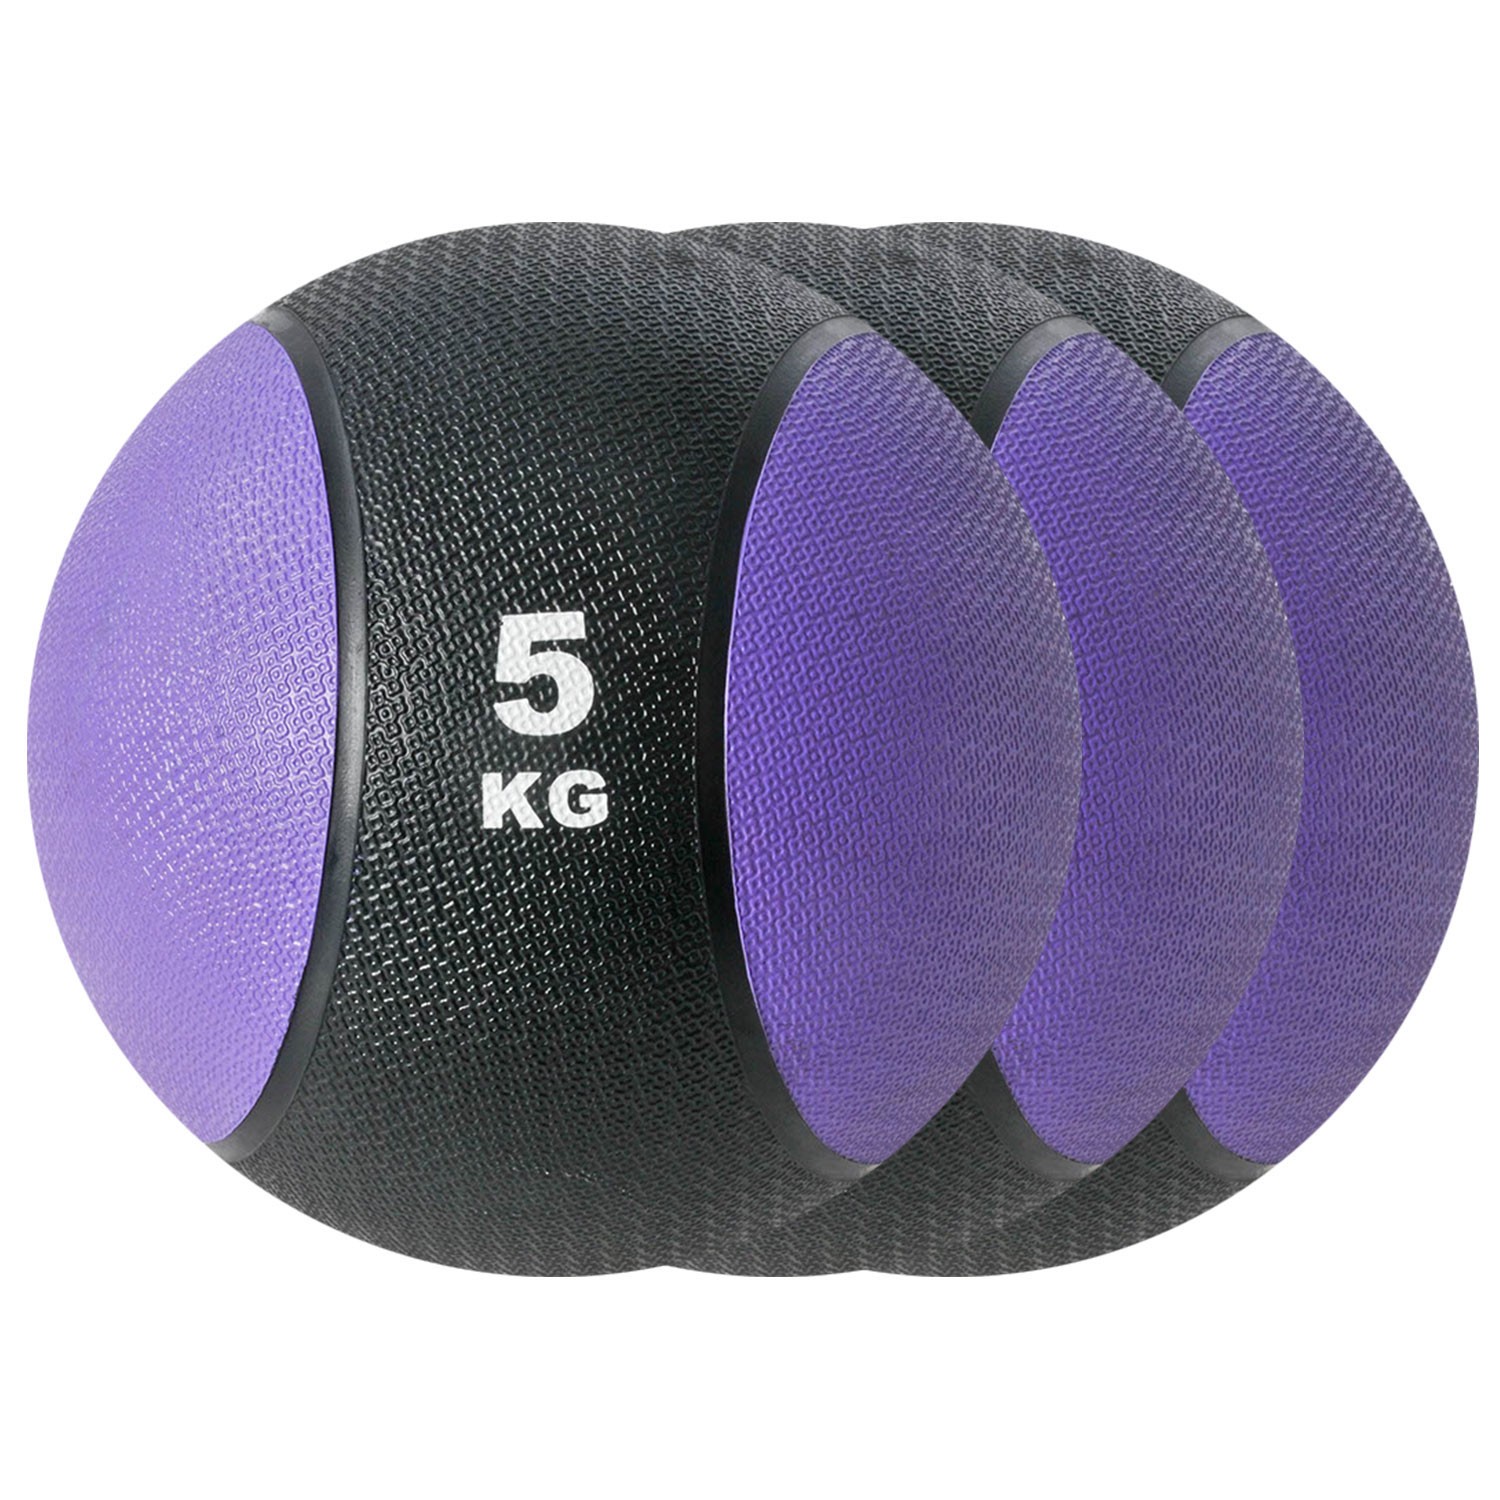 3x Kawanyo Medizin Ball - 5kg